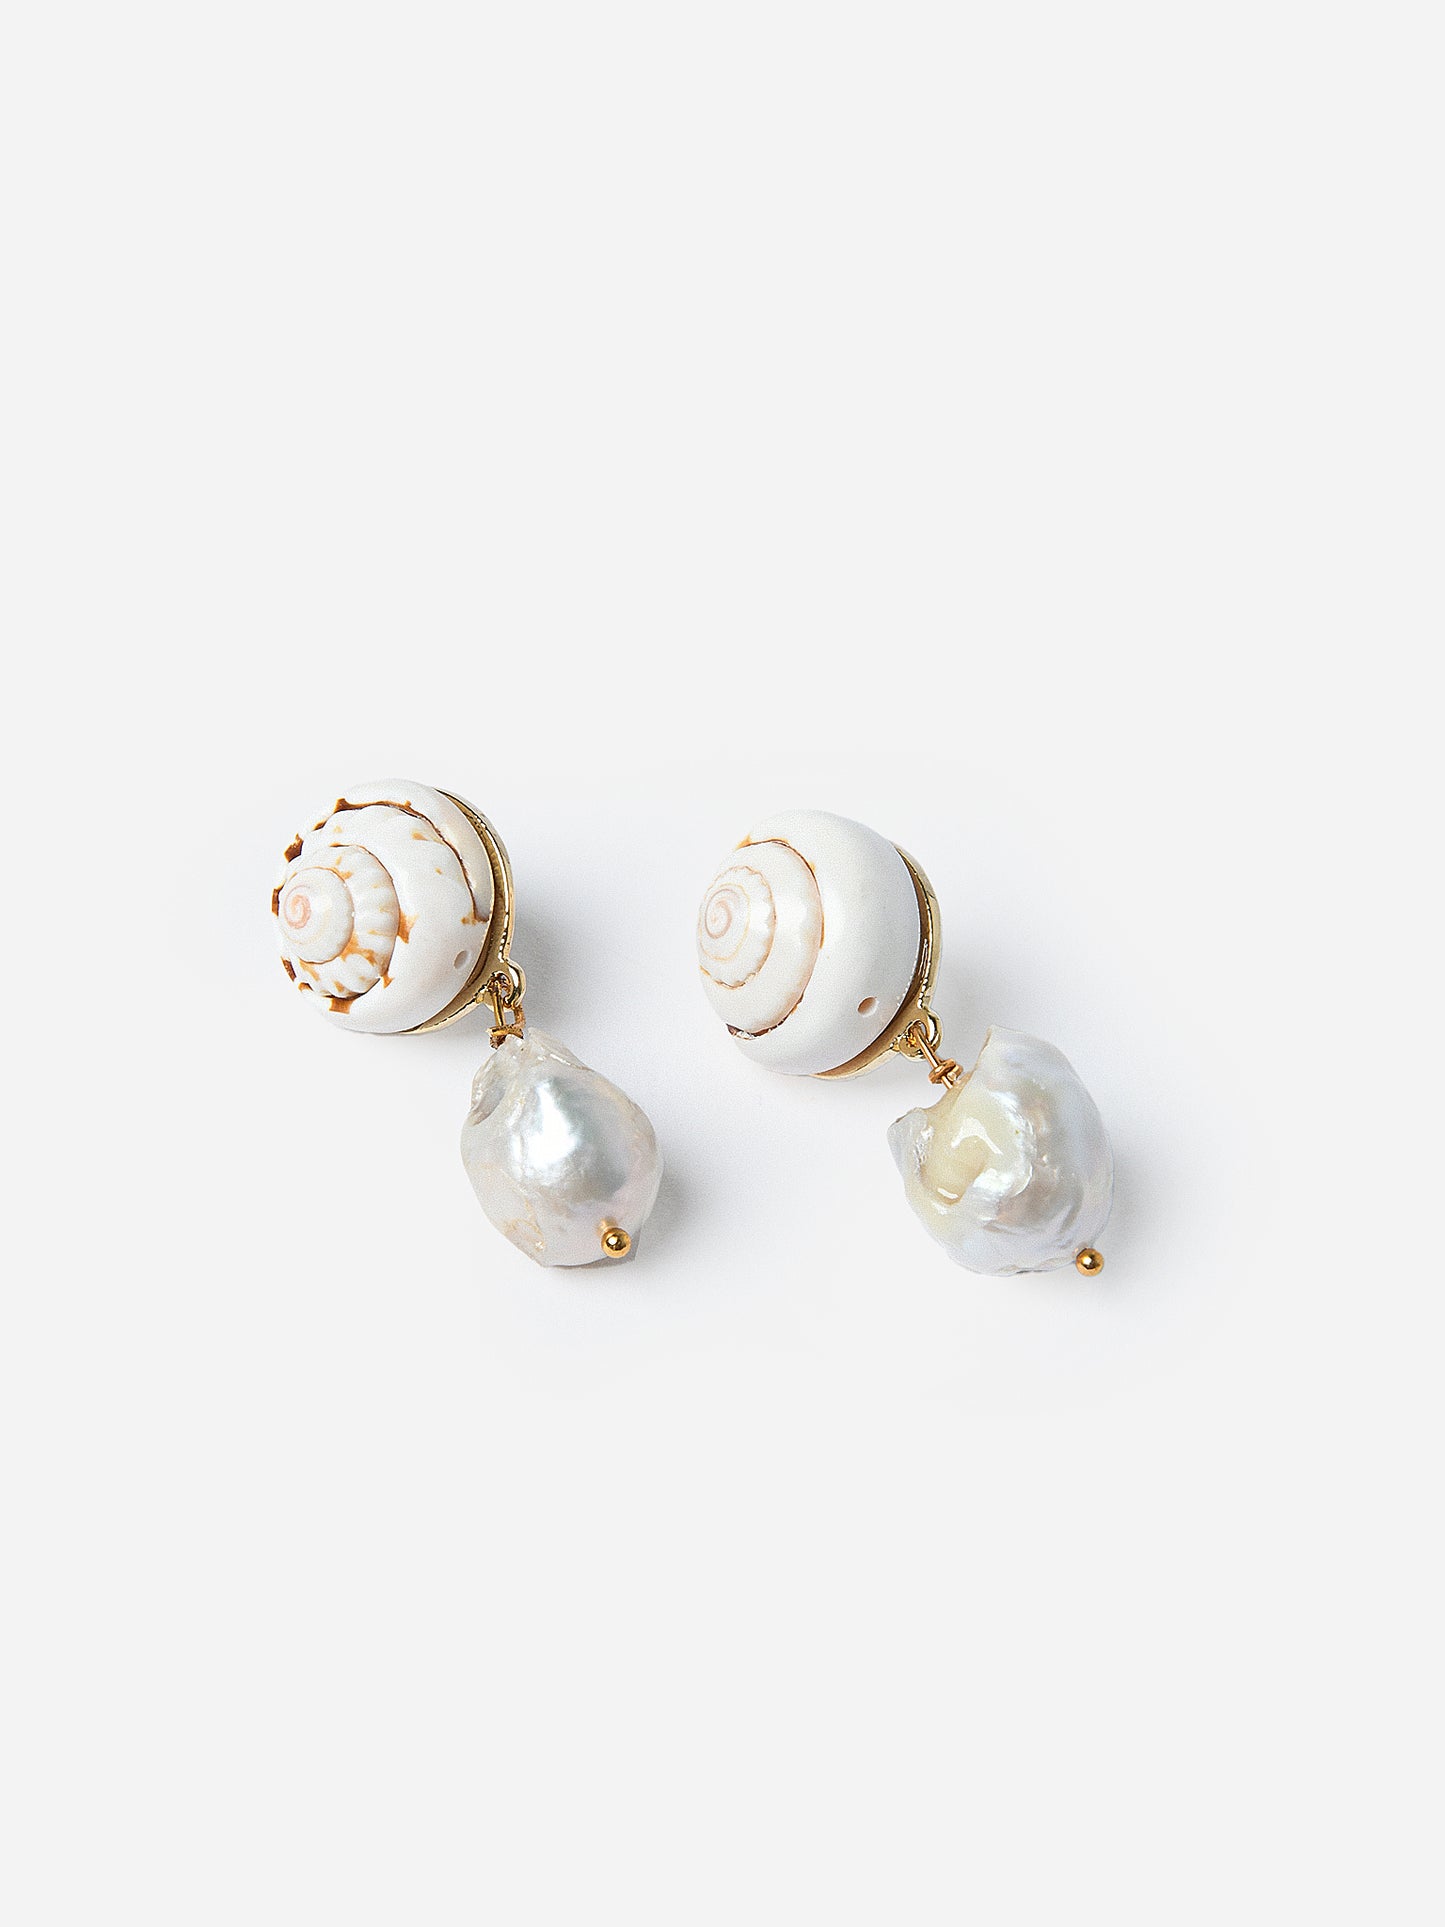 Neely Phelan Women's Cowrie Baroque Pearl Earrings